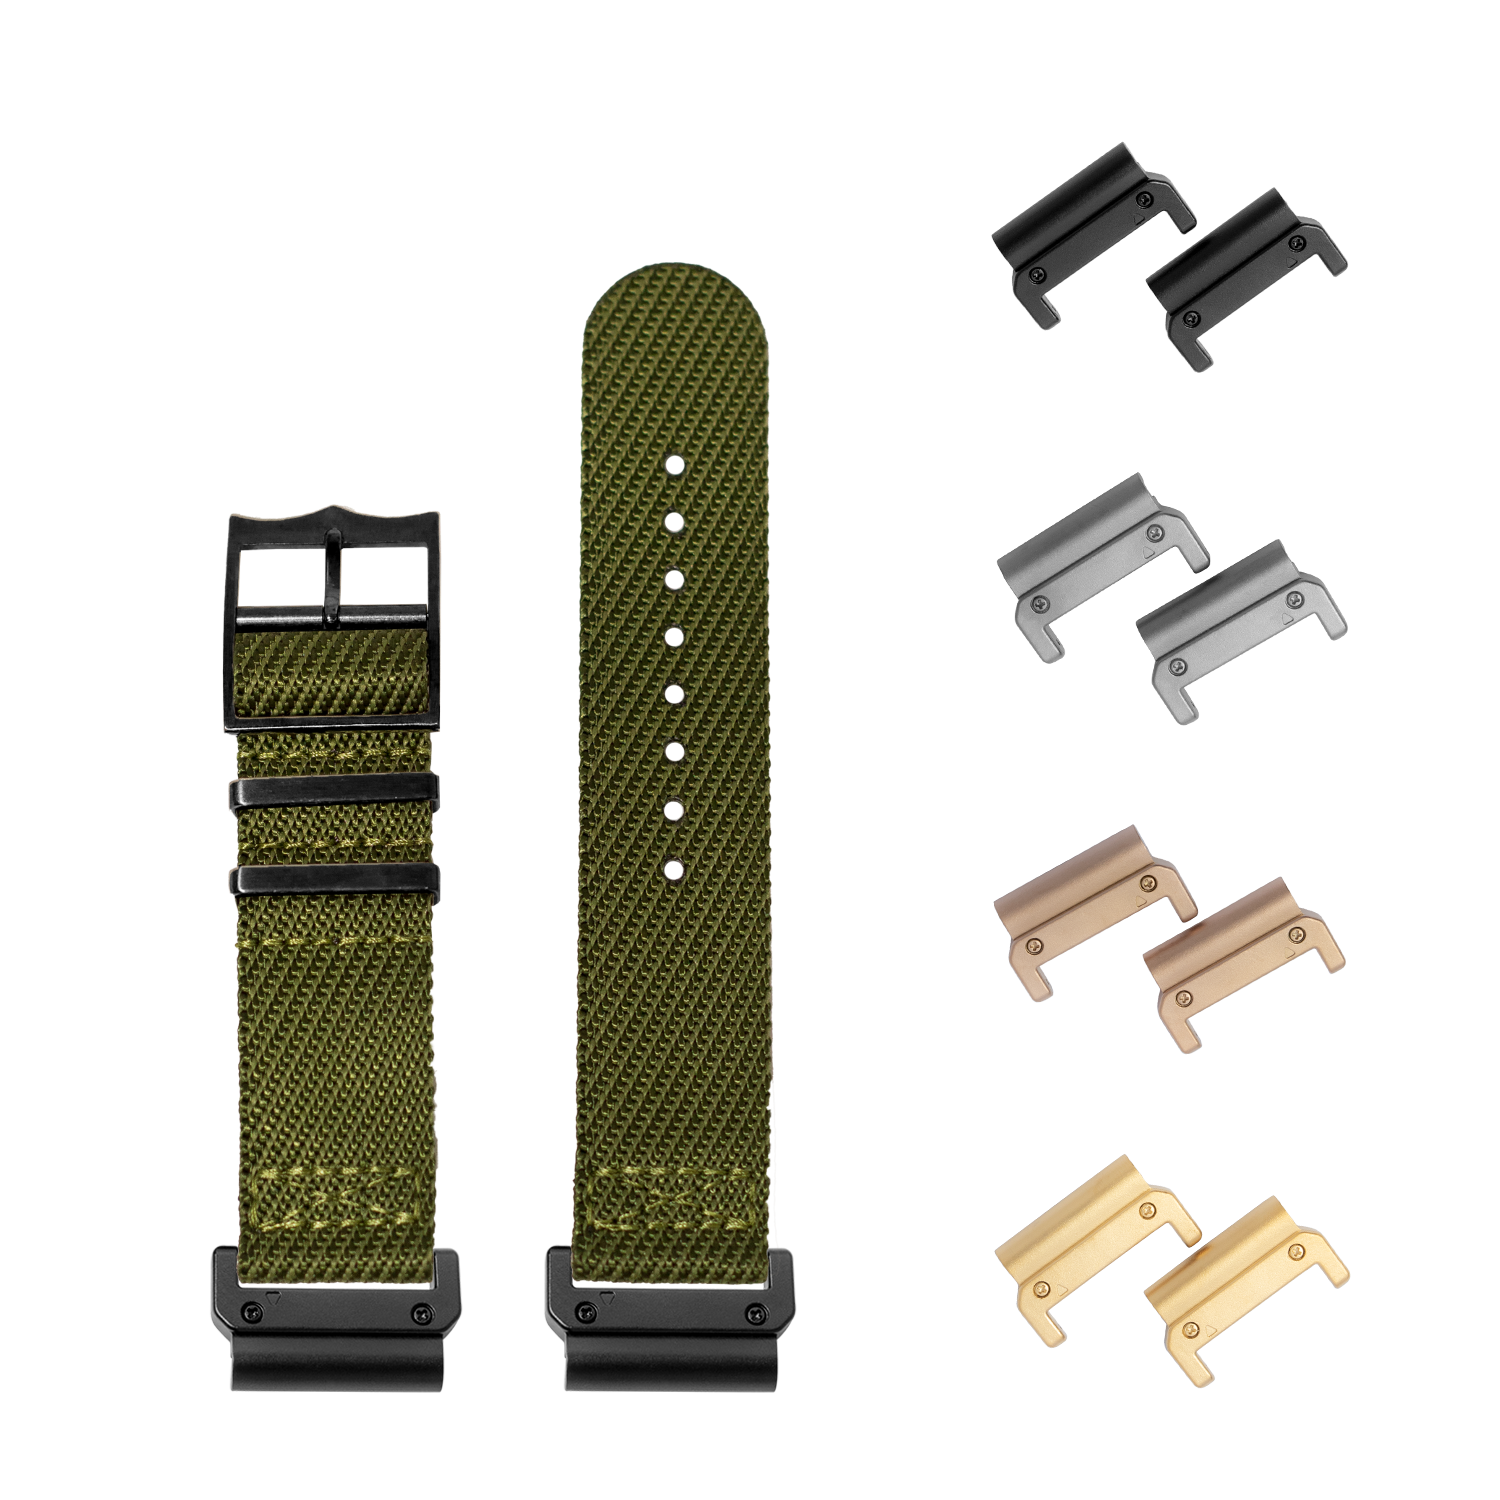 [QuickFit] Cross Militex - Army Green [Black Hardware] 22mm